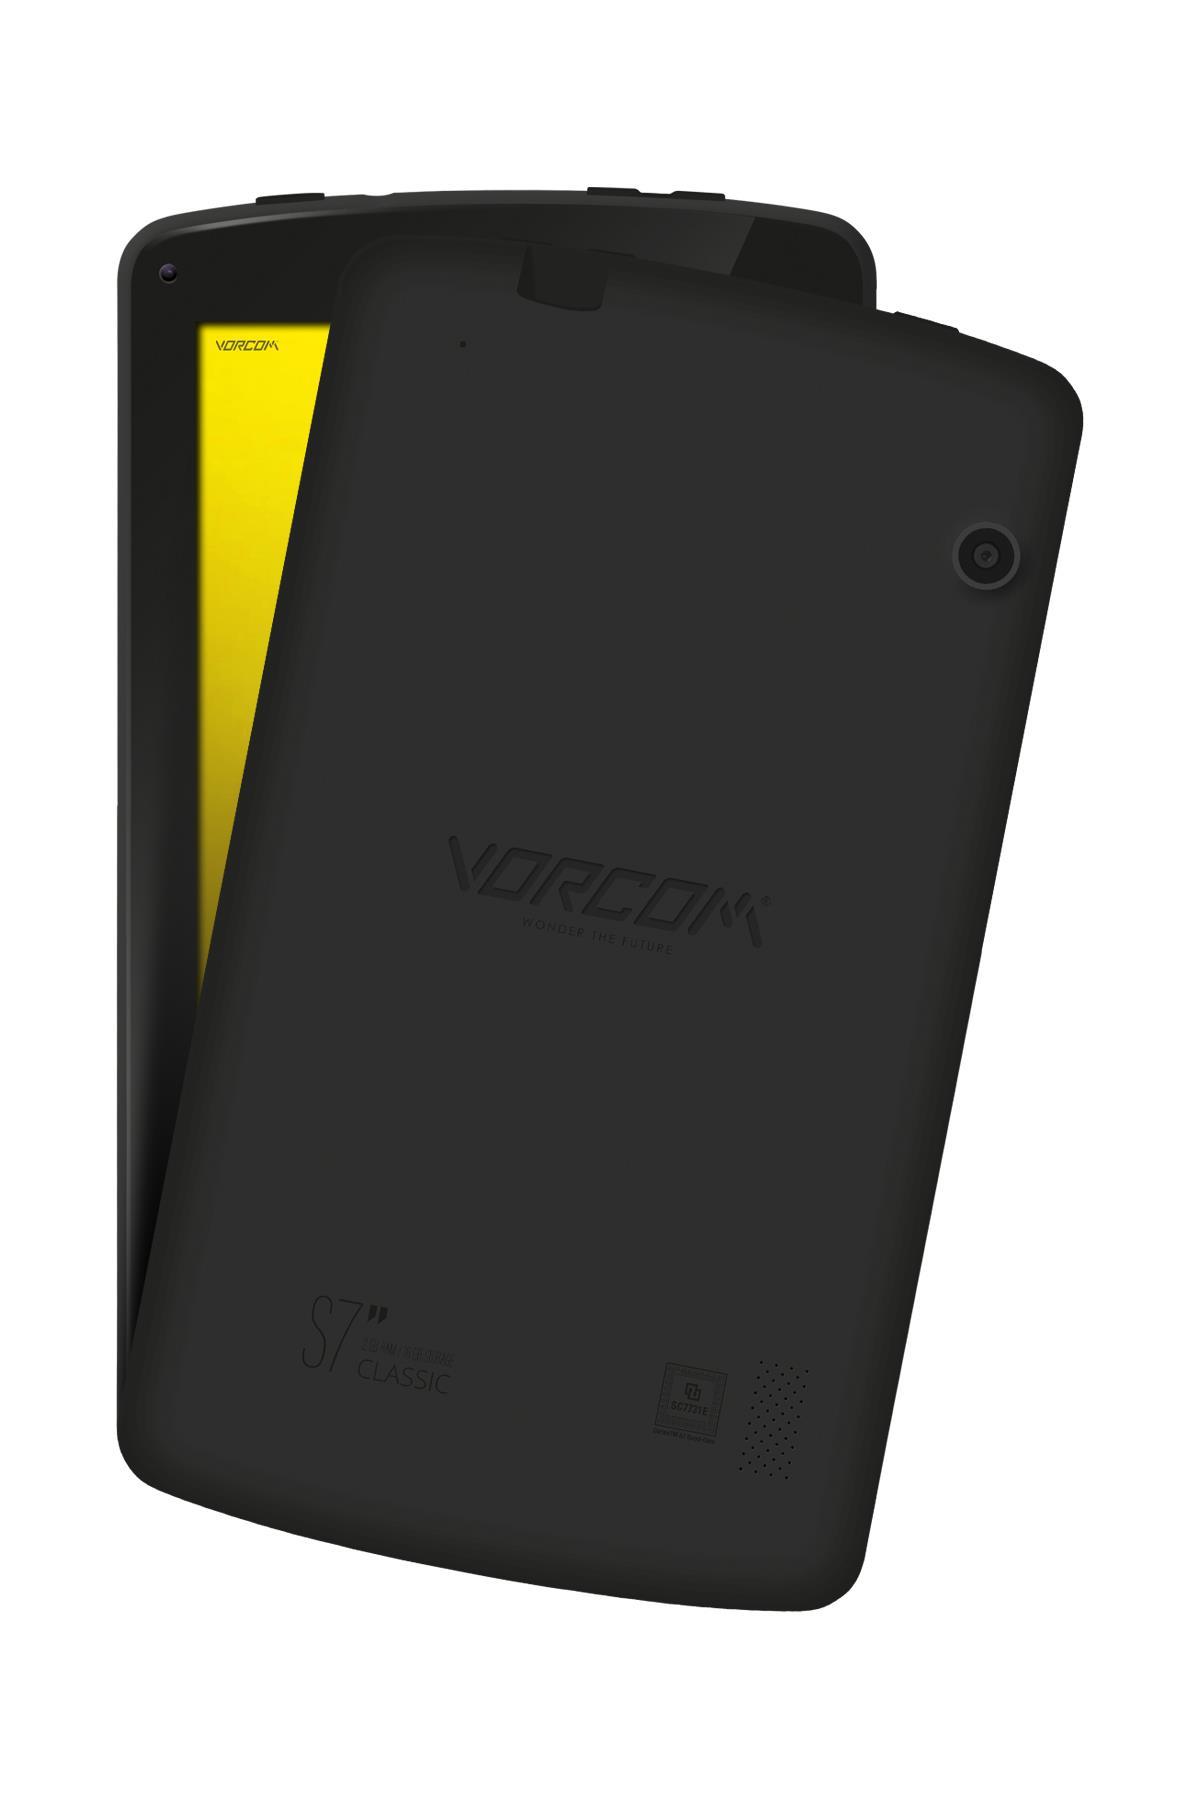 Vorcom S7 Siyah 32 GB 7" Tablet 2 GB Ram 4 Cpu Eba Zoom Youtube Pubg